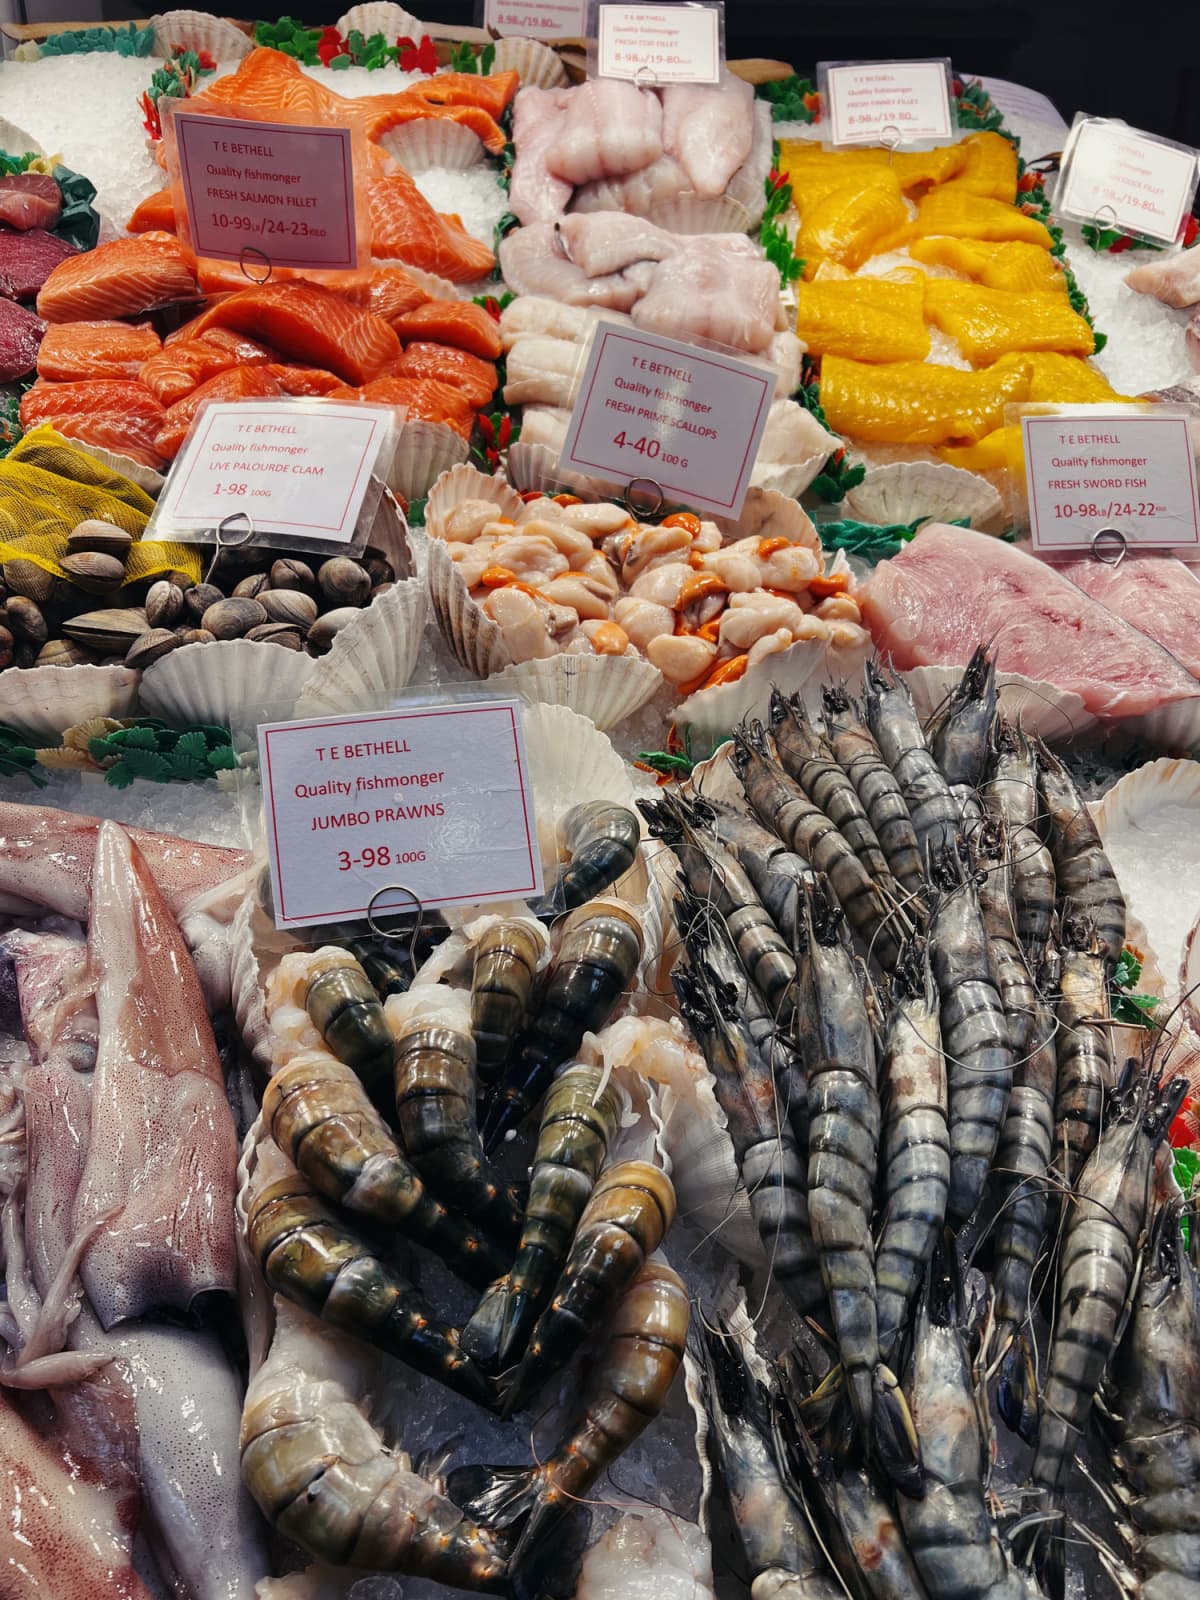 Seafood displayed on ice at market